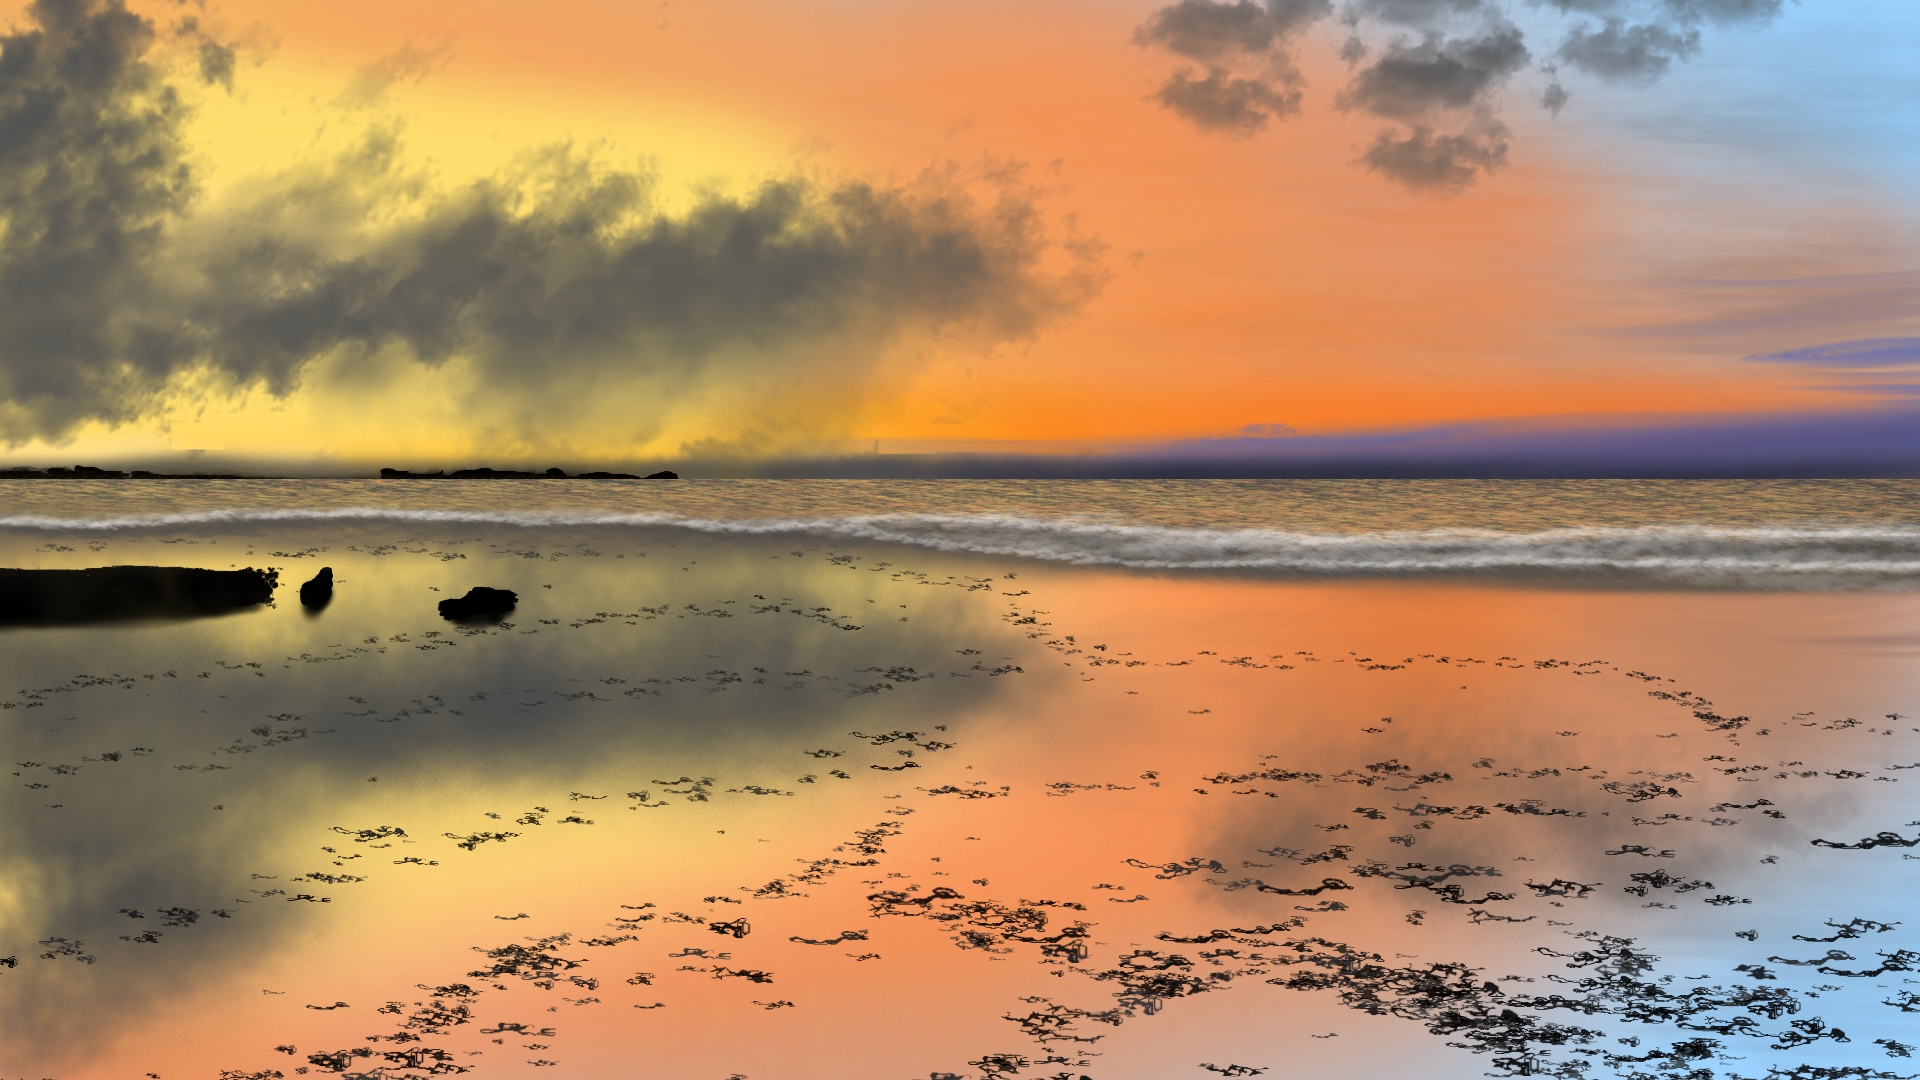 General 1920x1080 digital painting digital art beach colorful landscape horizon water waves sky sunset glow sunlight